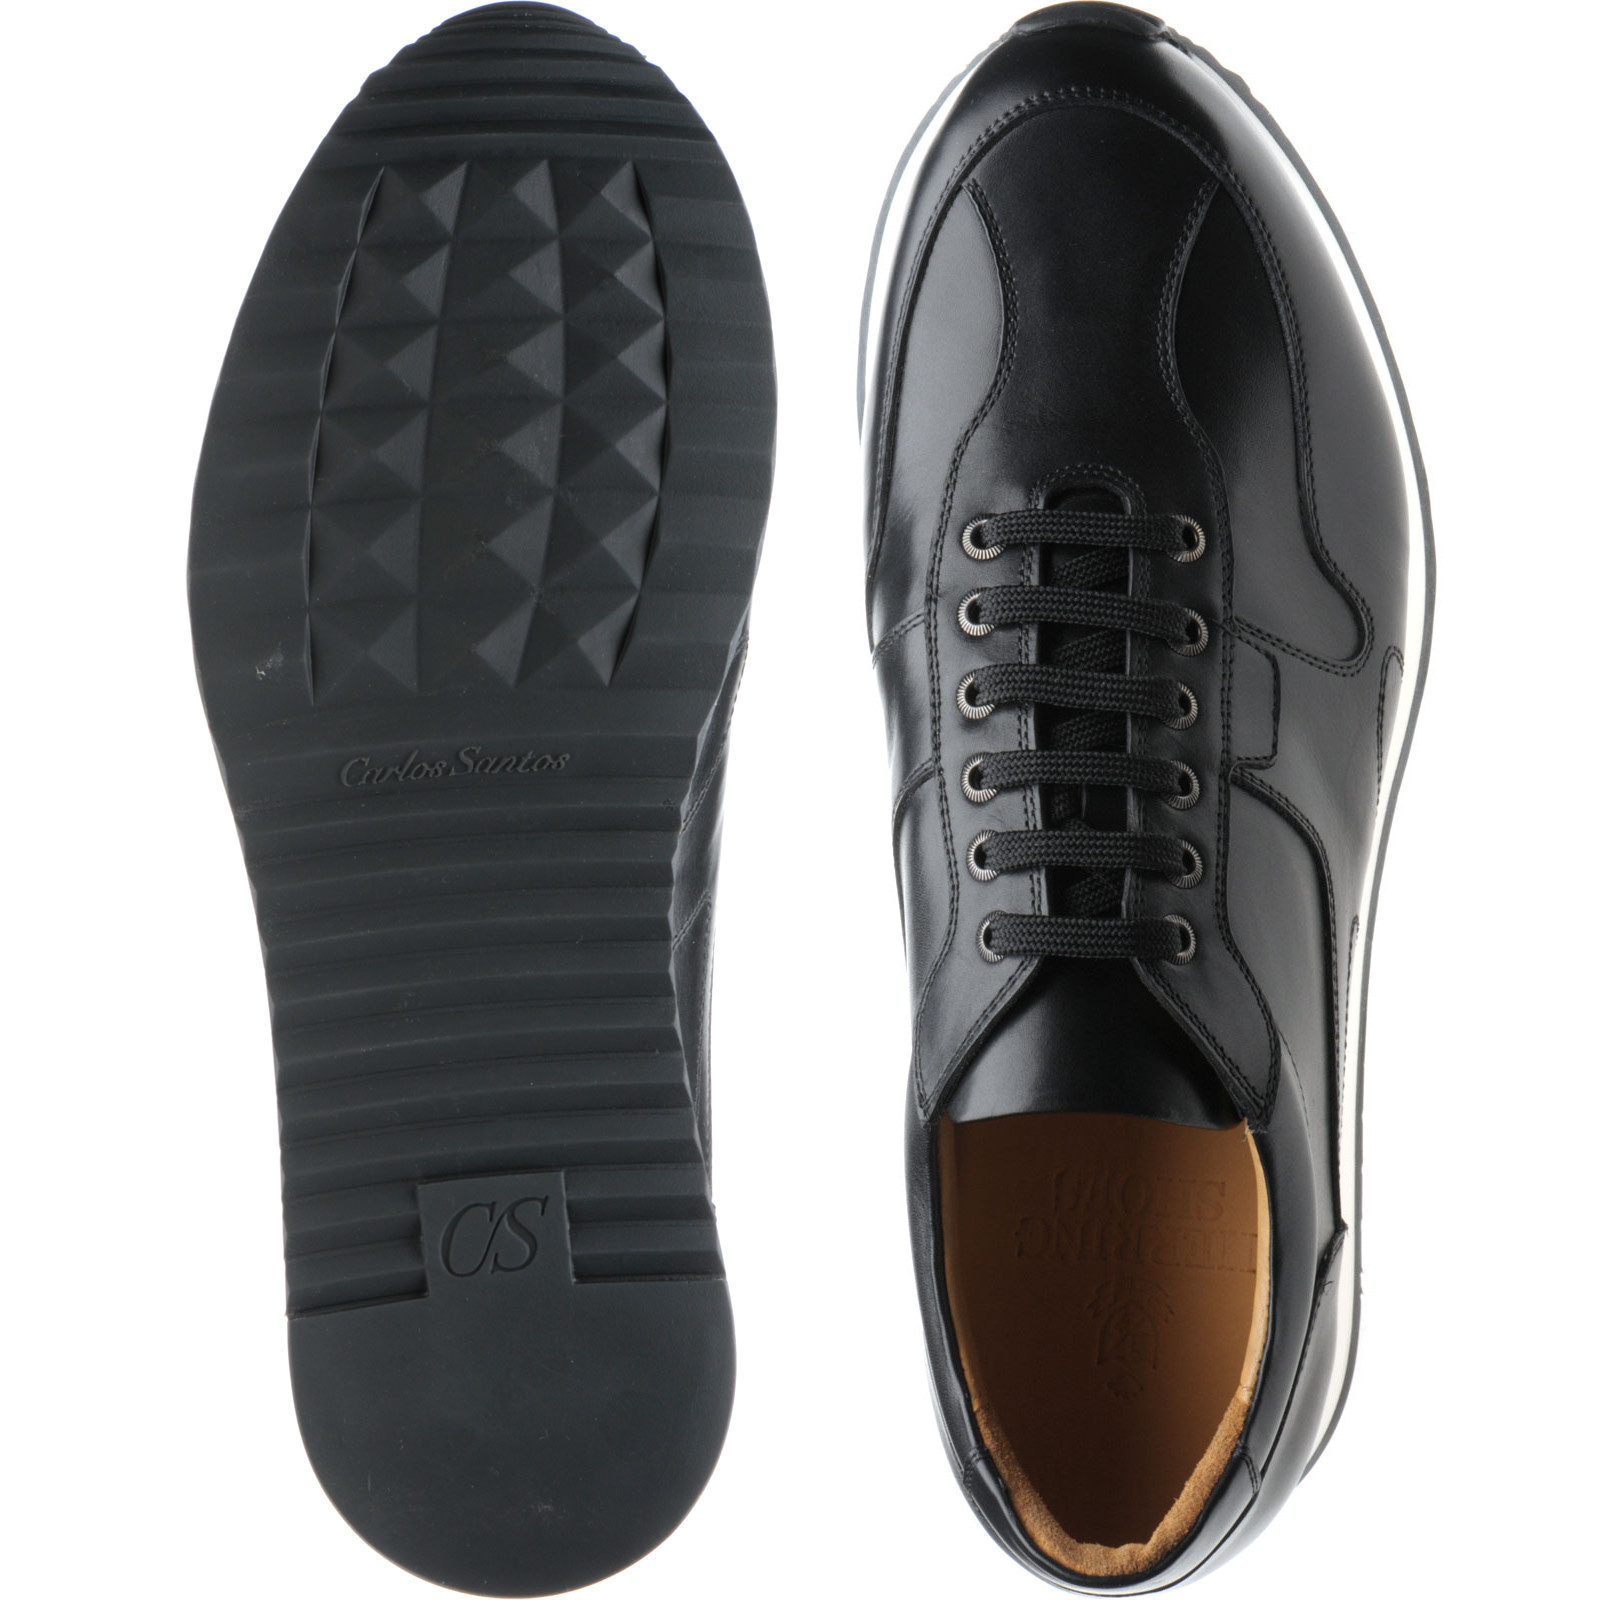 Herring shoes | Herring Classic | Goodwood rubber-soled in Black Calf ...